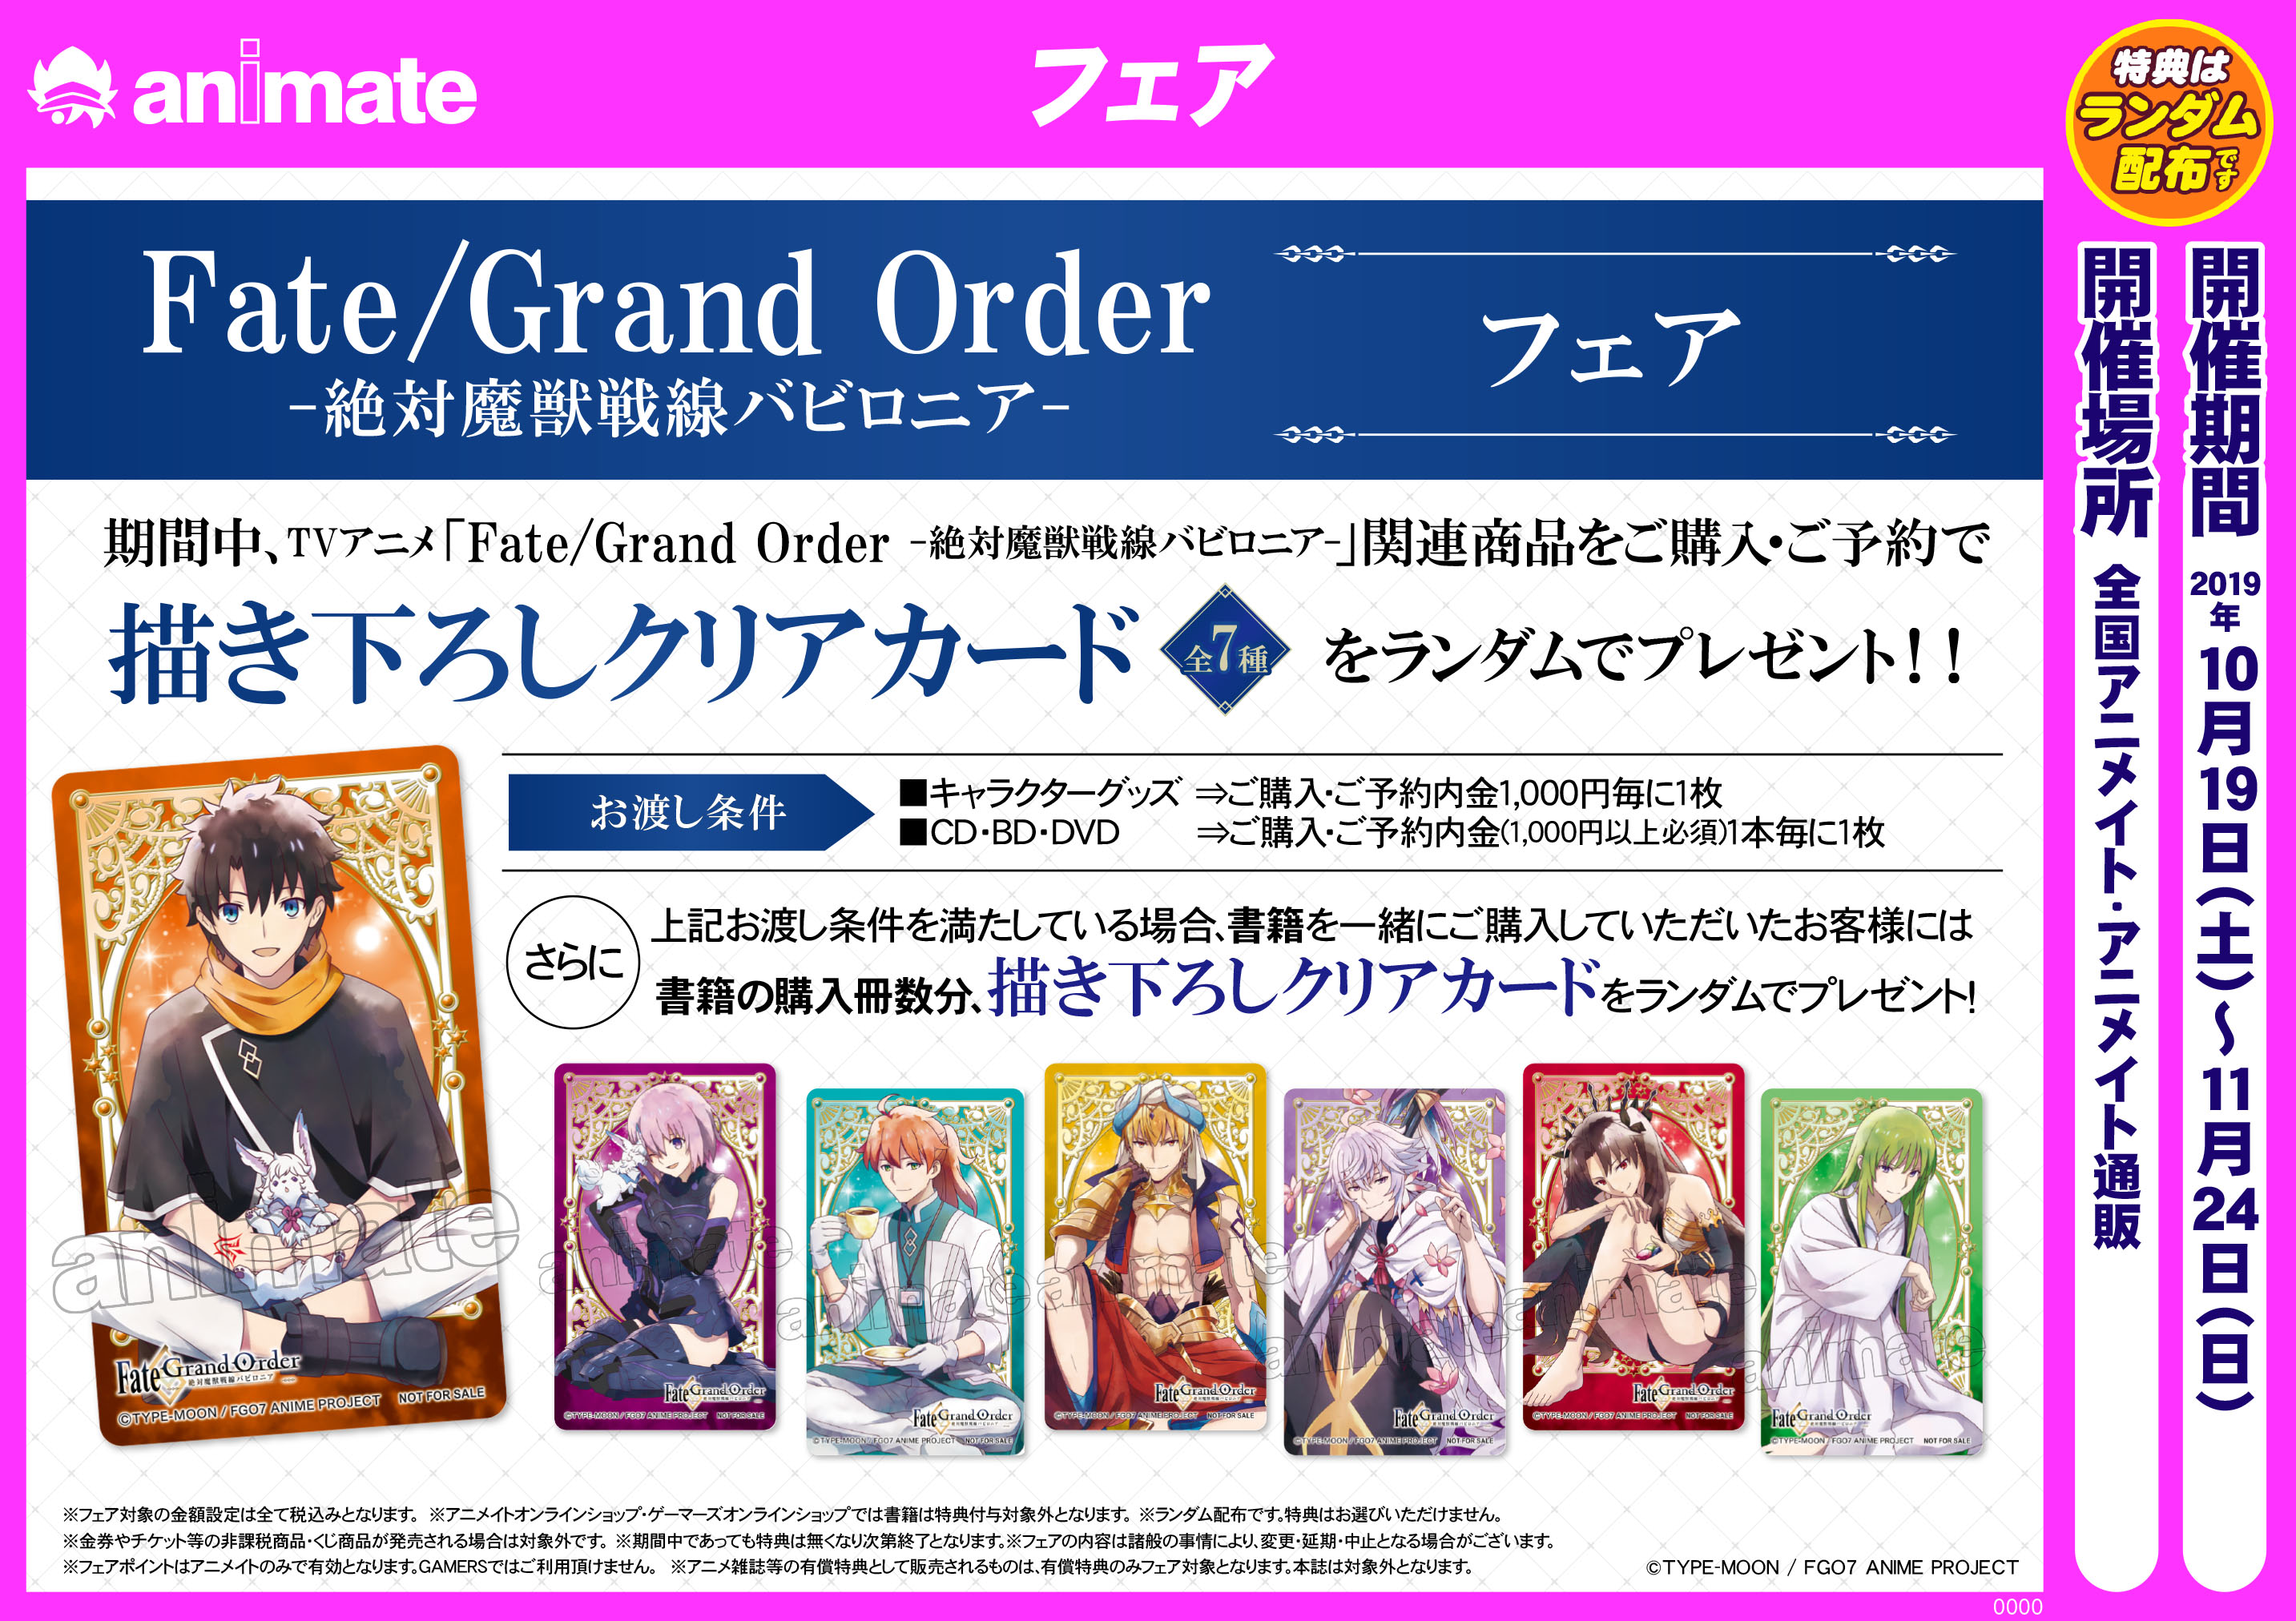 Fate Grand Order 絶対魔獣戦線バビロニア フェア アニメイト福井